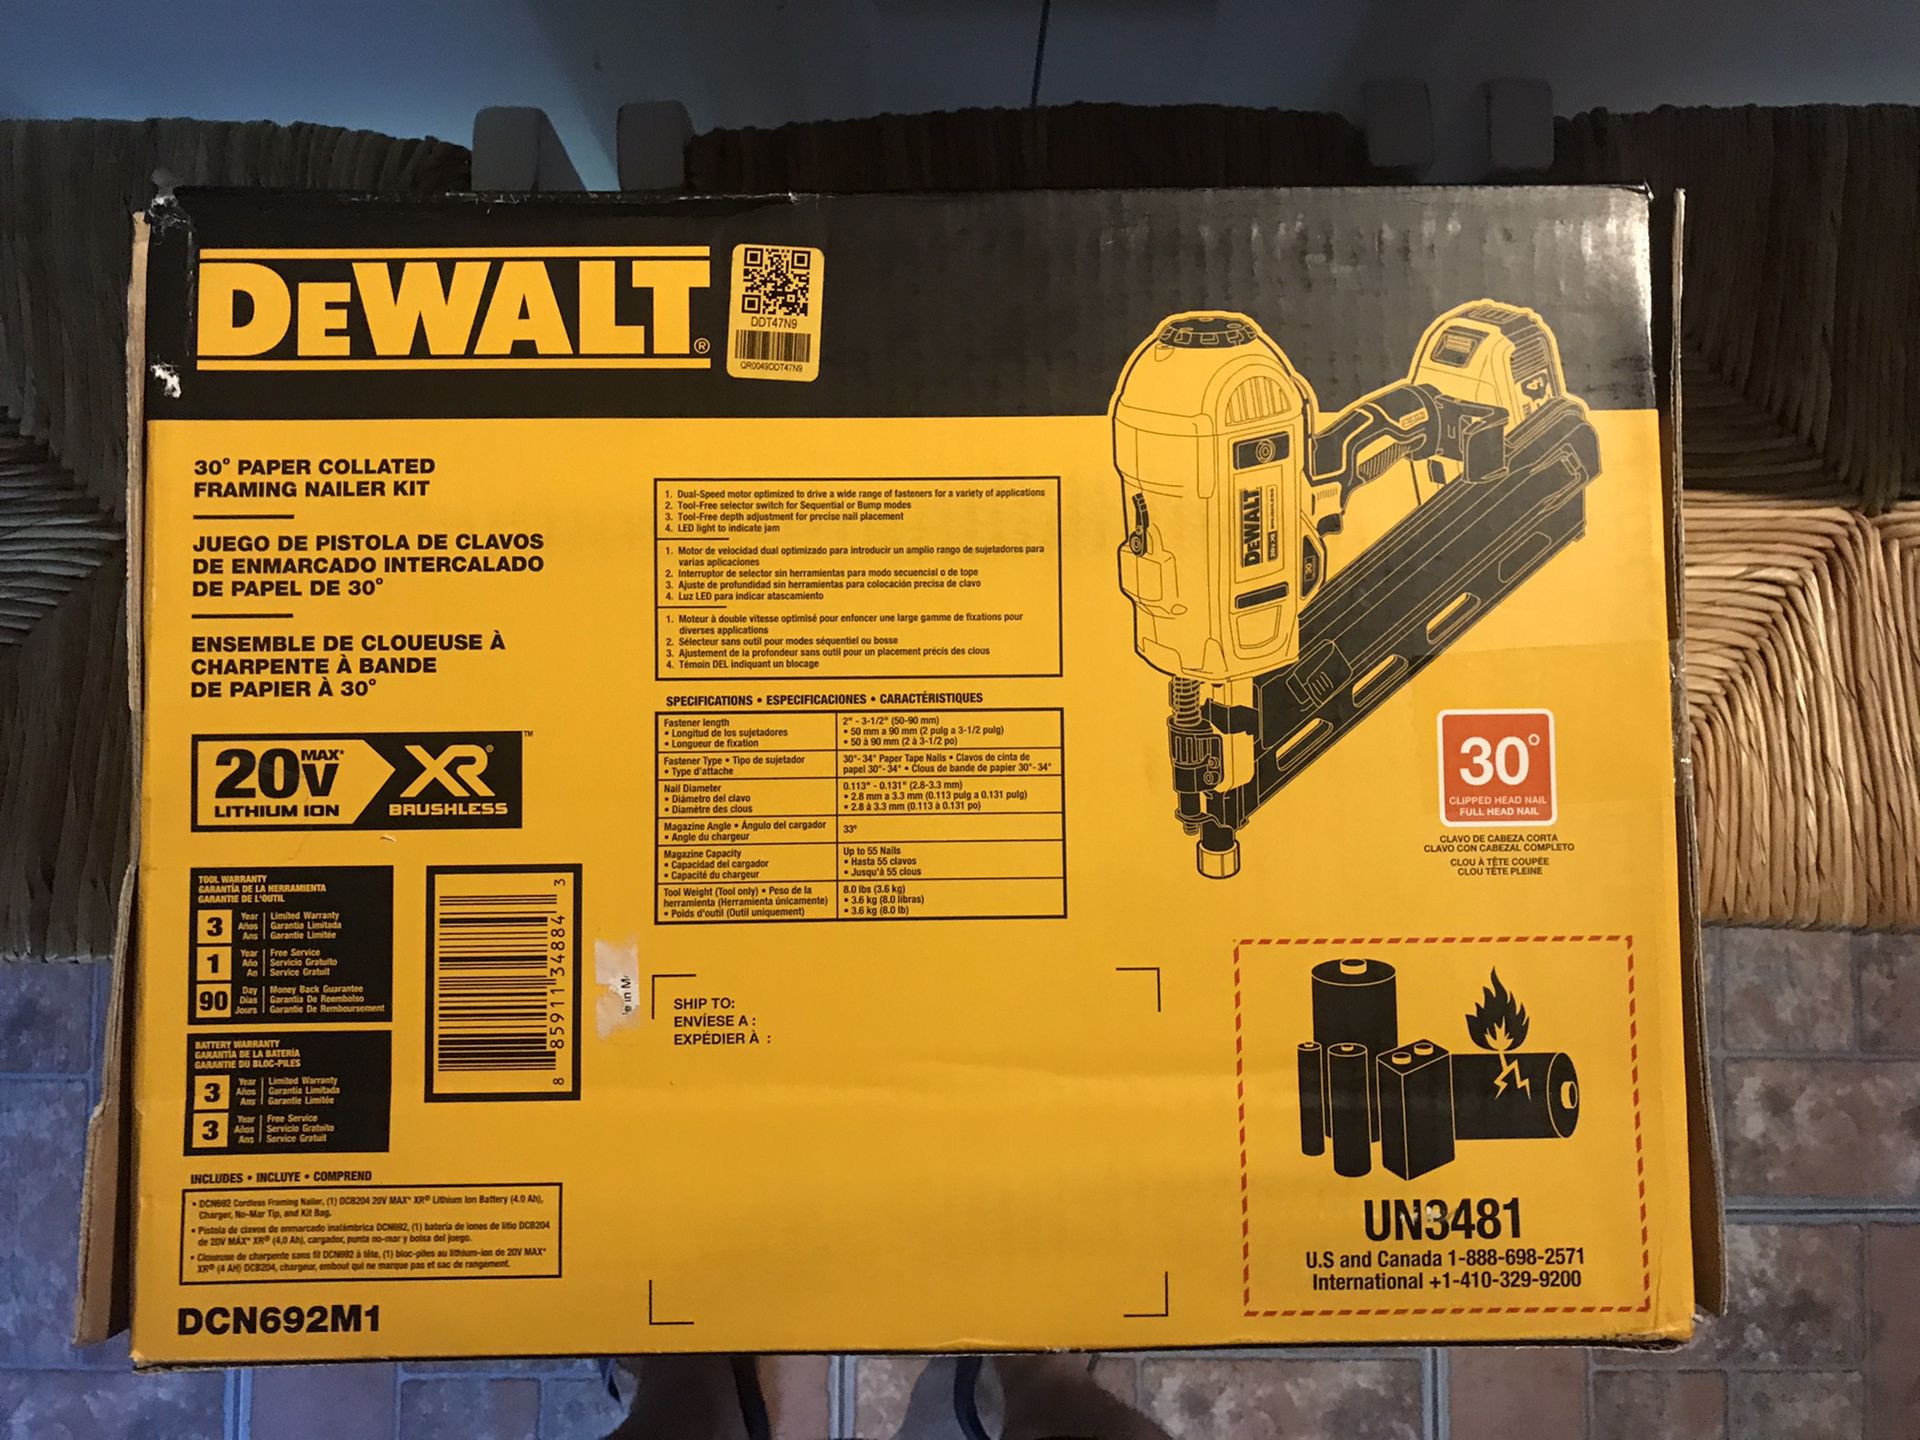 DEWALT. 30” Paper collated framing nailer kit will negotiate.